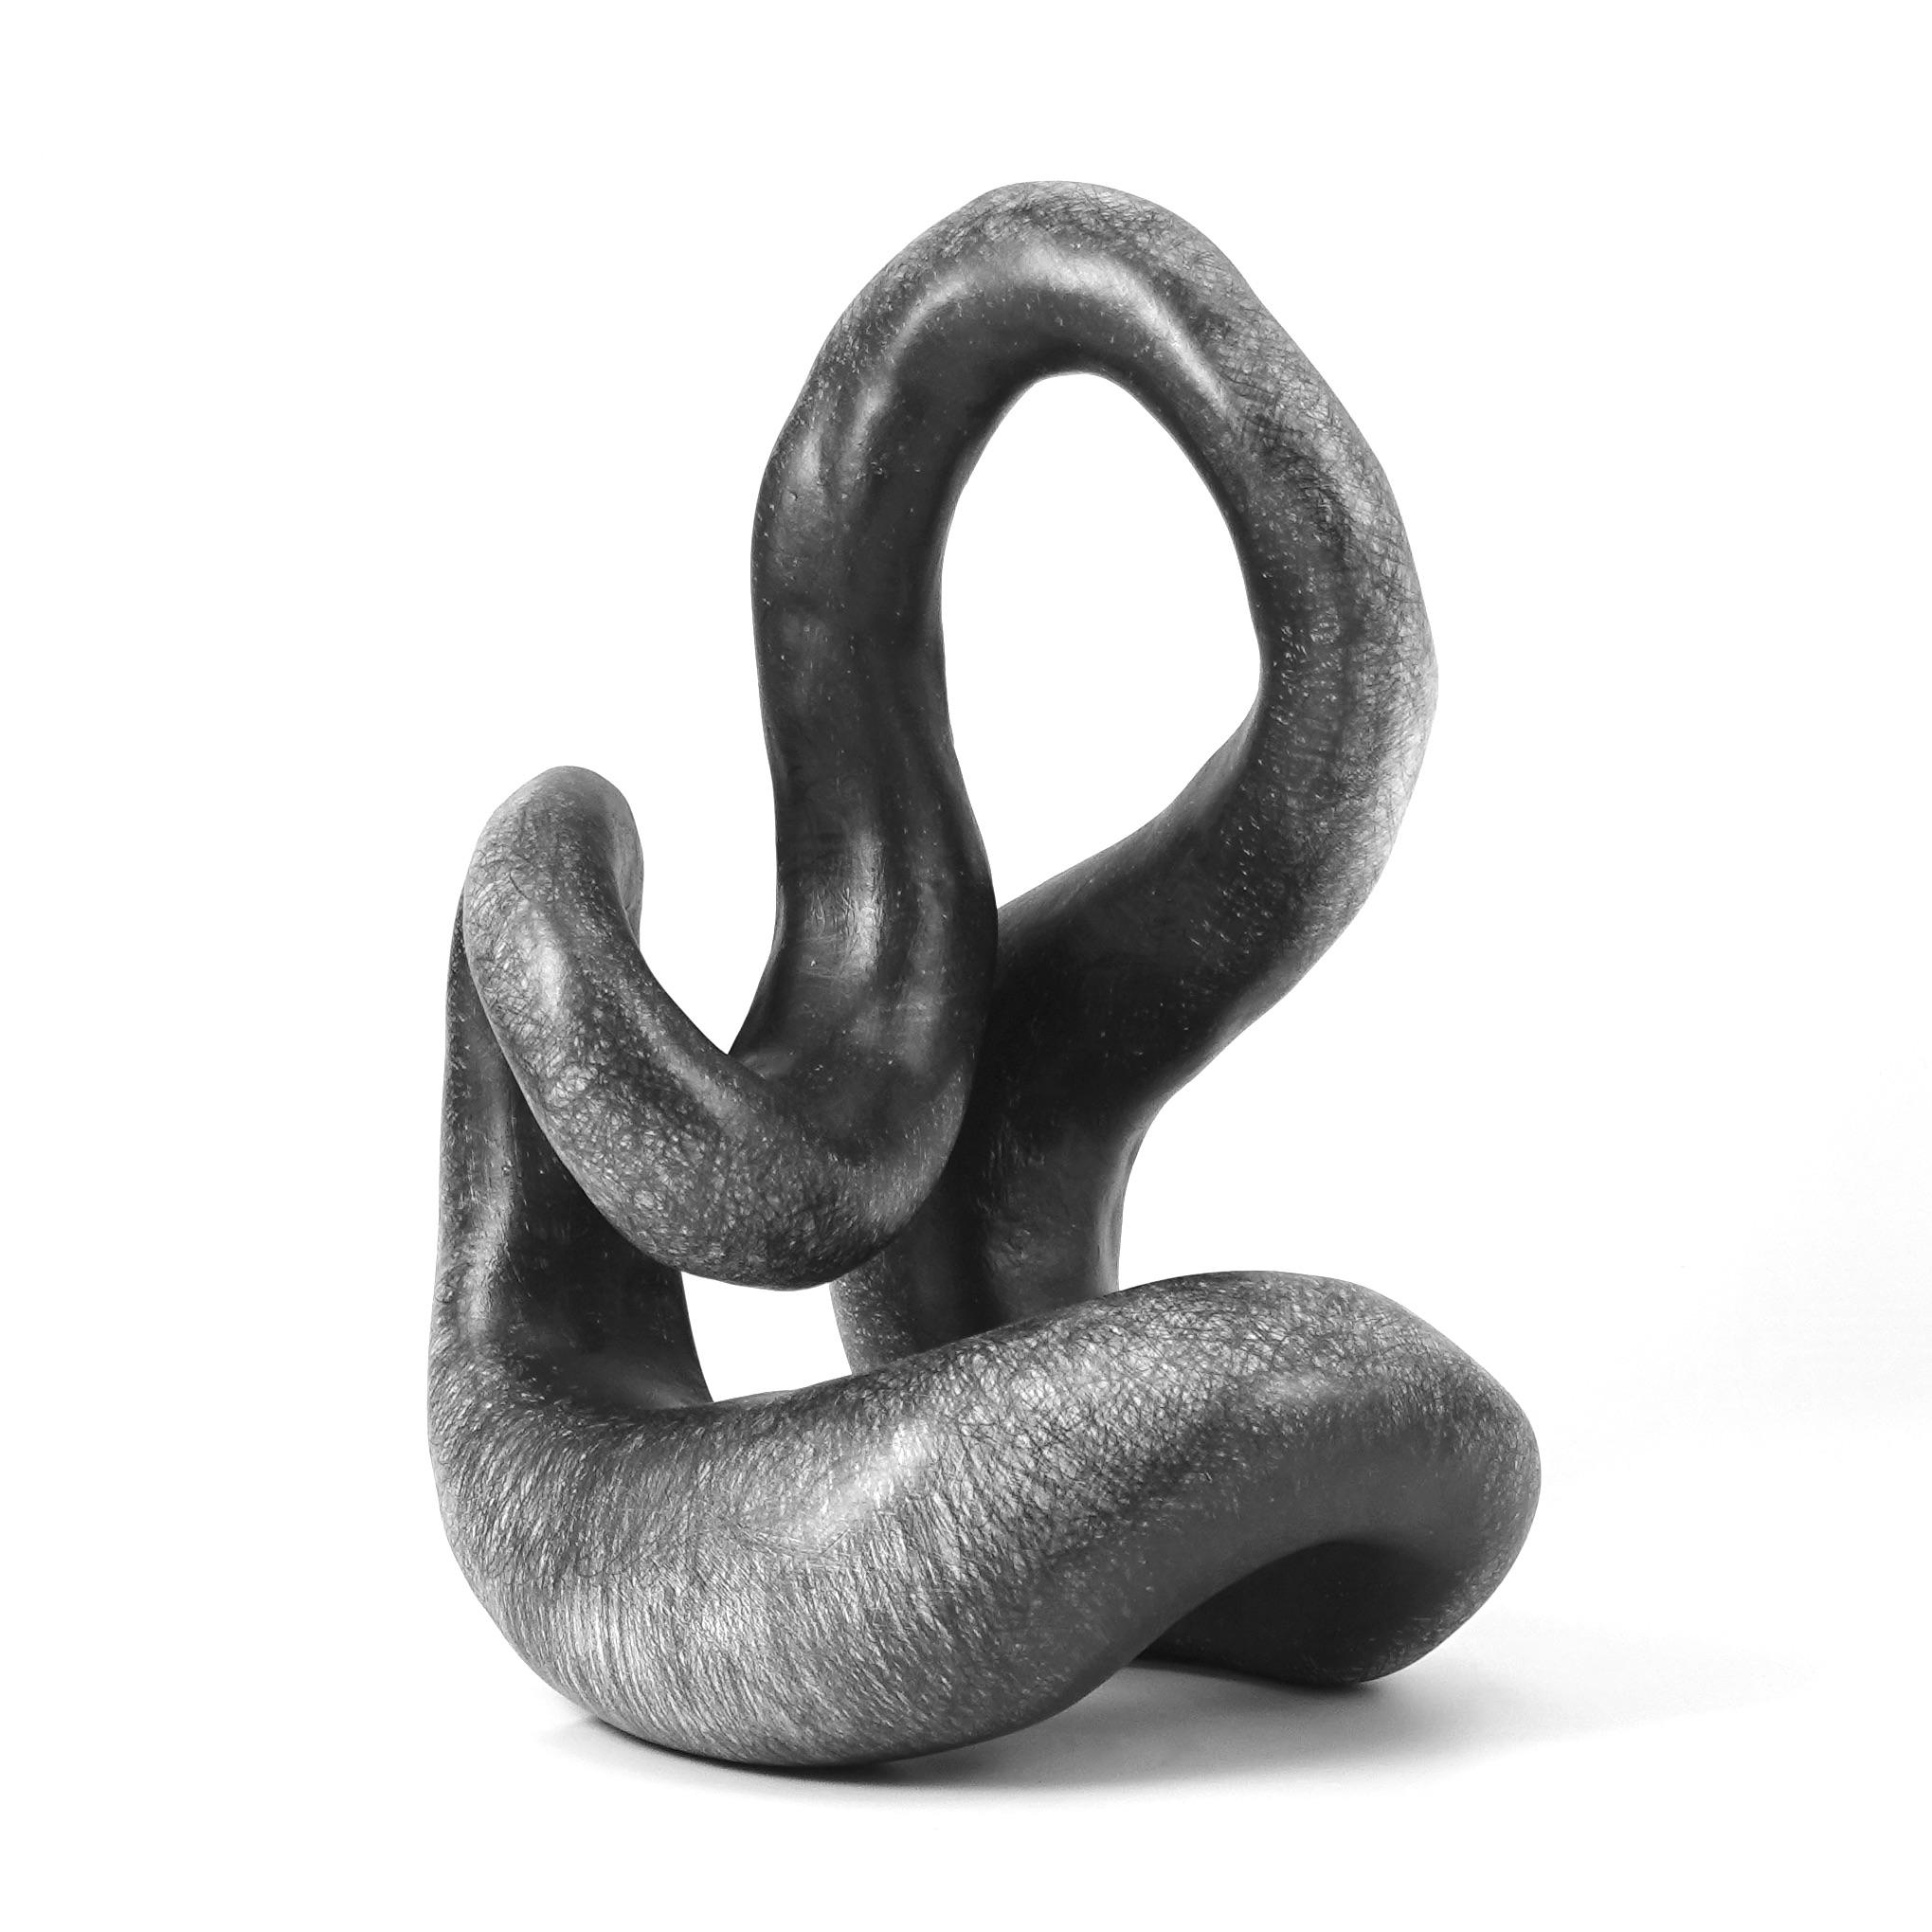  Abstract Minimal Clay Sculpture: 'Twerk'